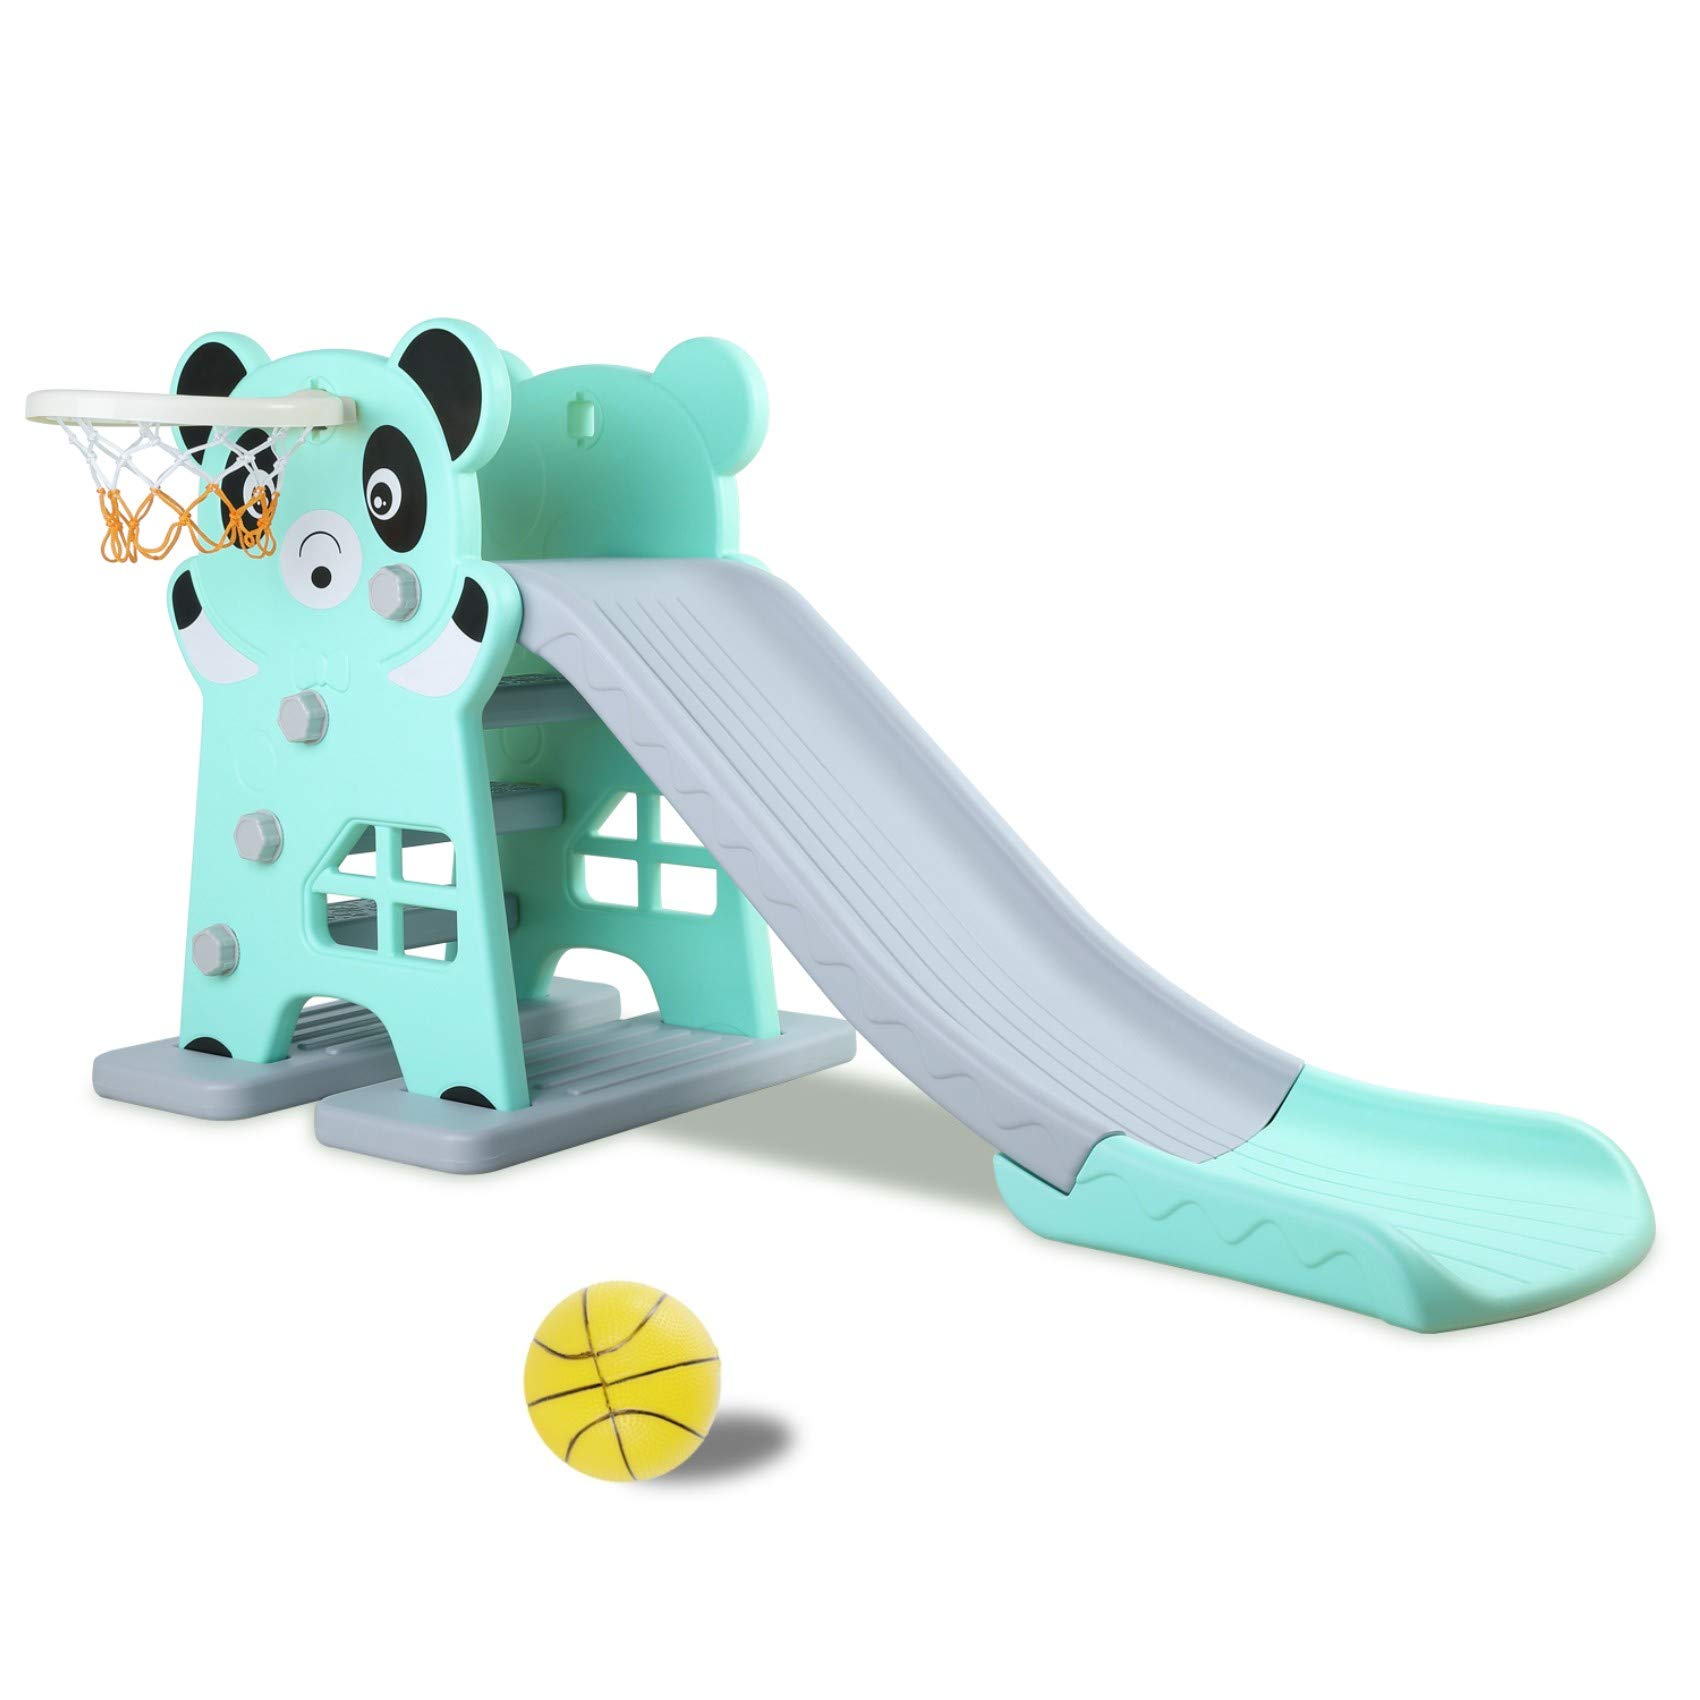 LAZY BUDDY Kids Slide, Sturdy Toddler Playground